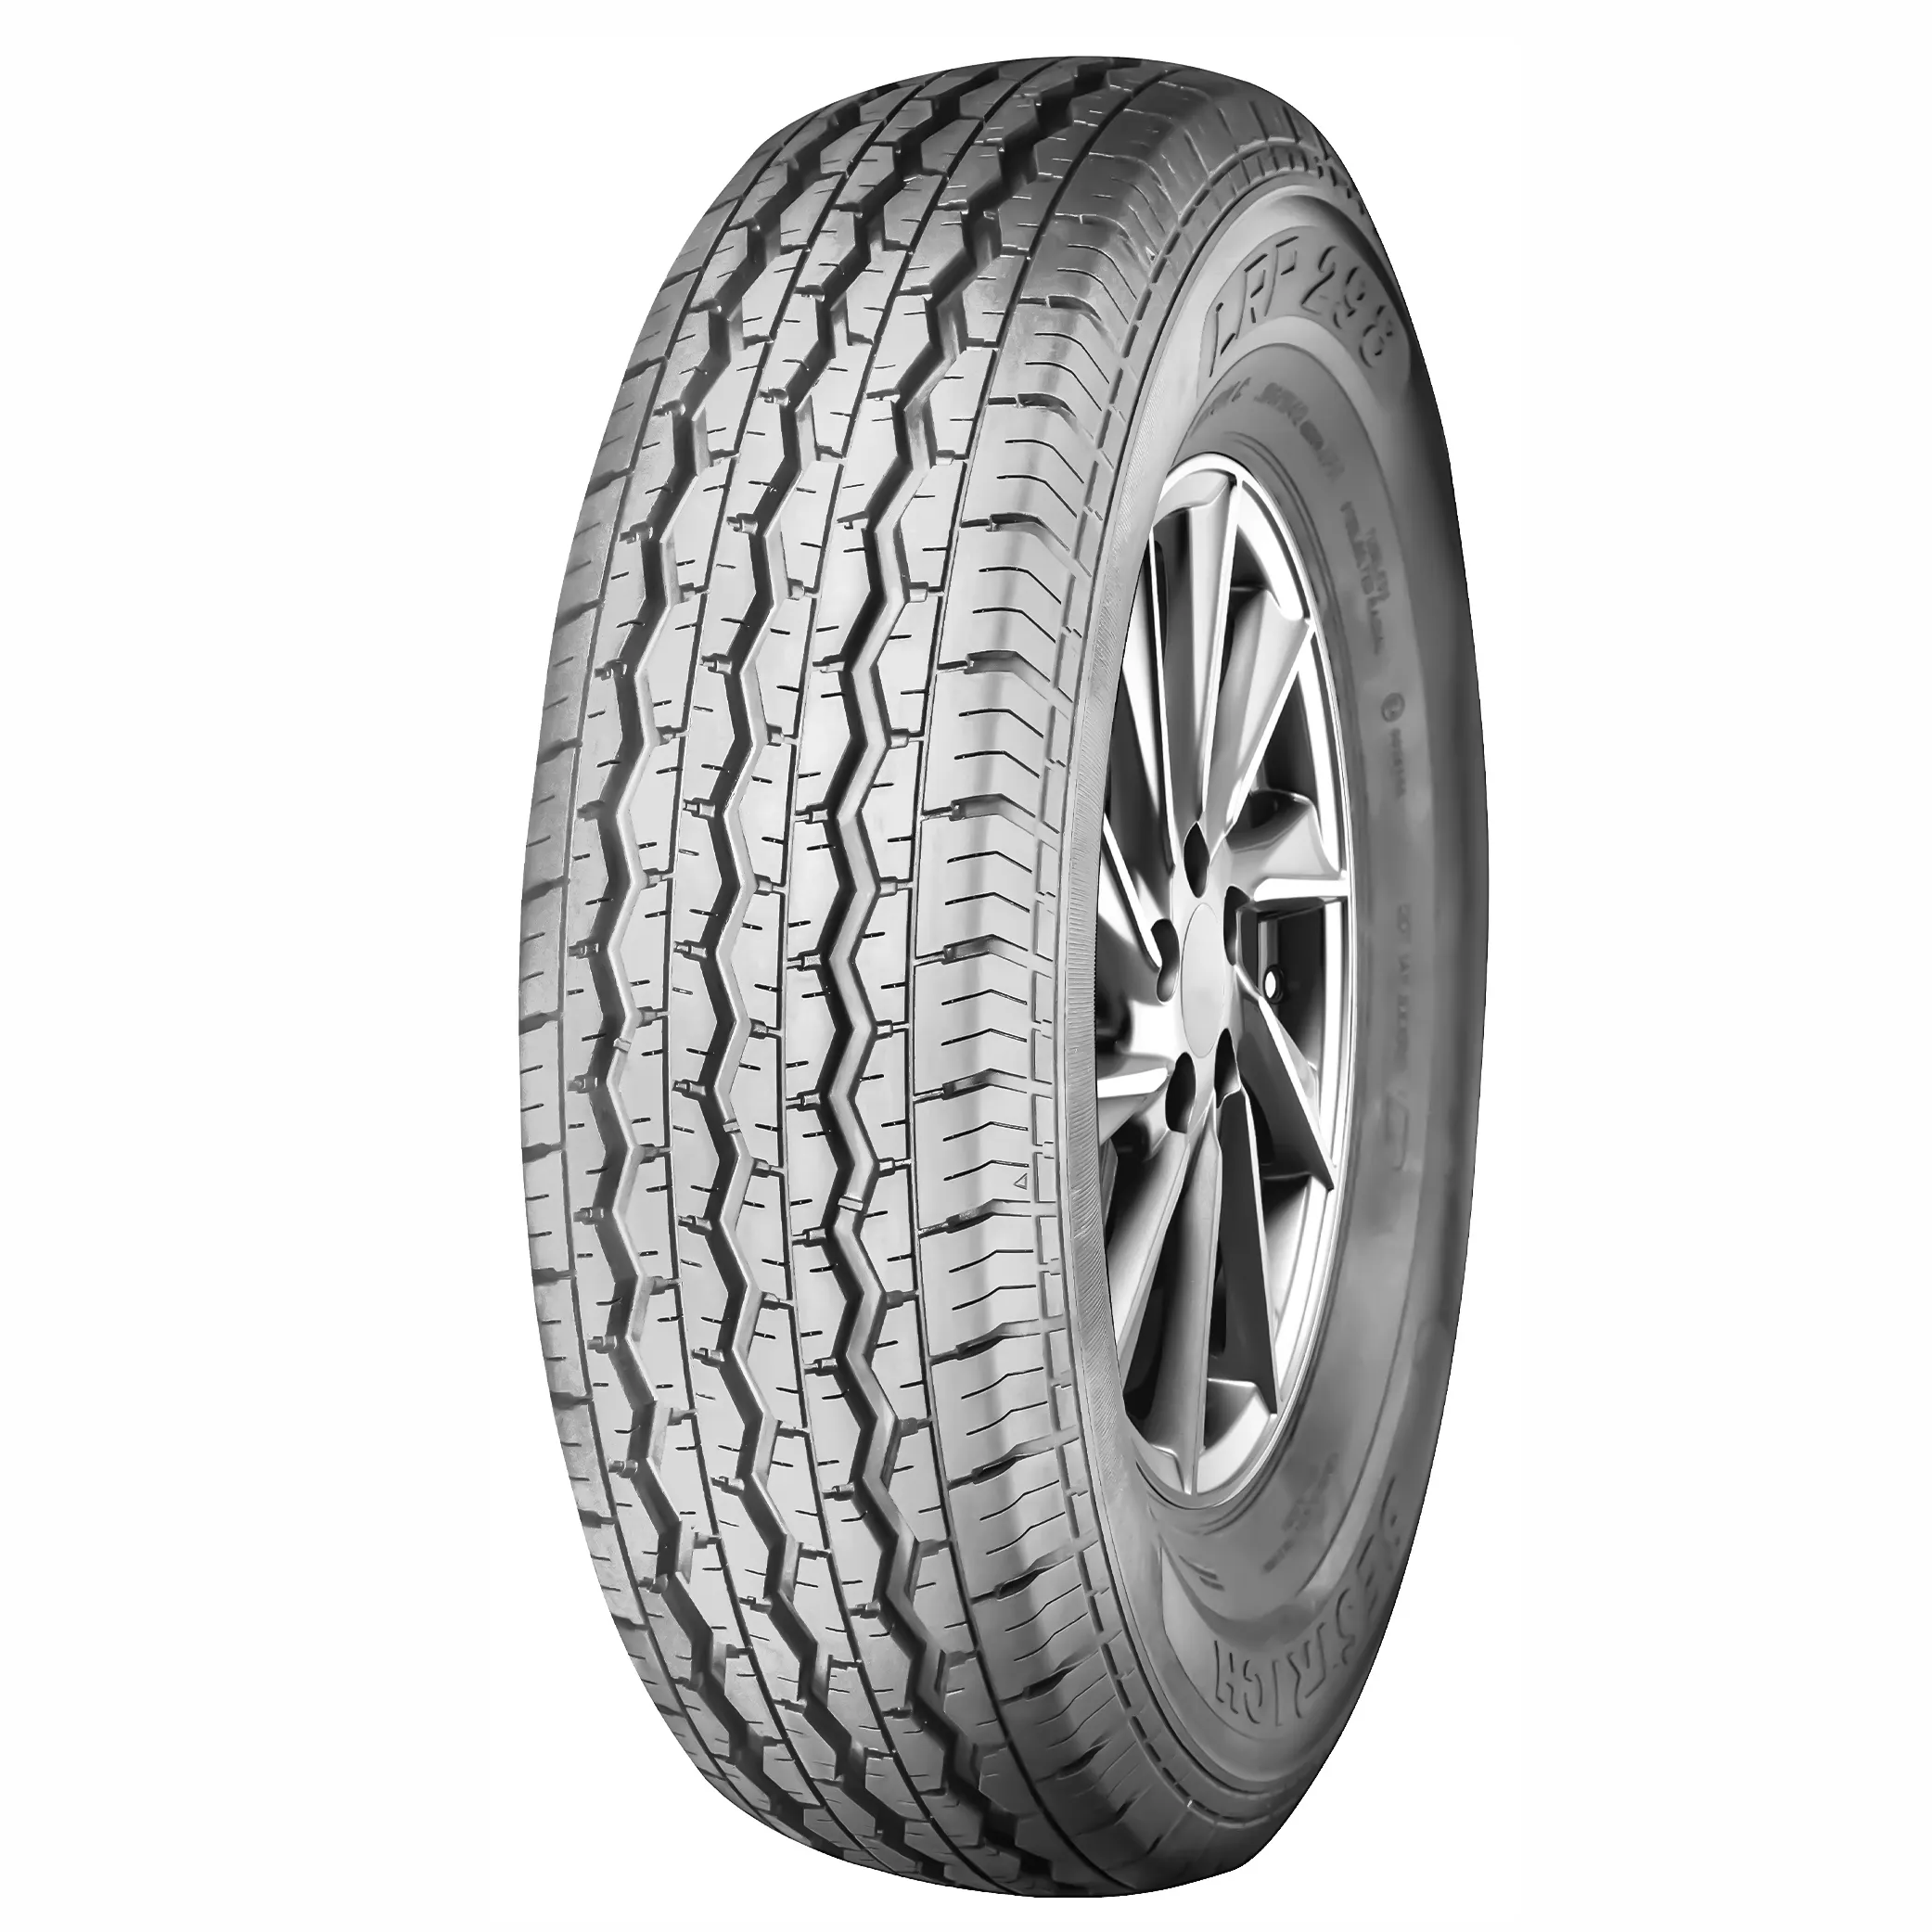 PCR tire, car prices in Dubai in new cars, goodride tires